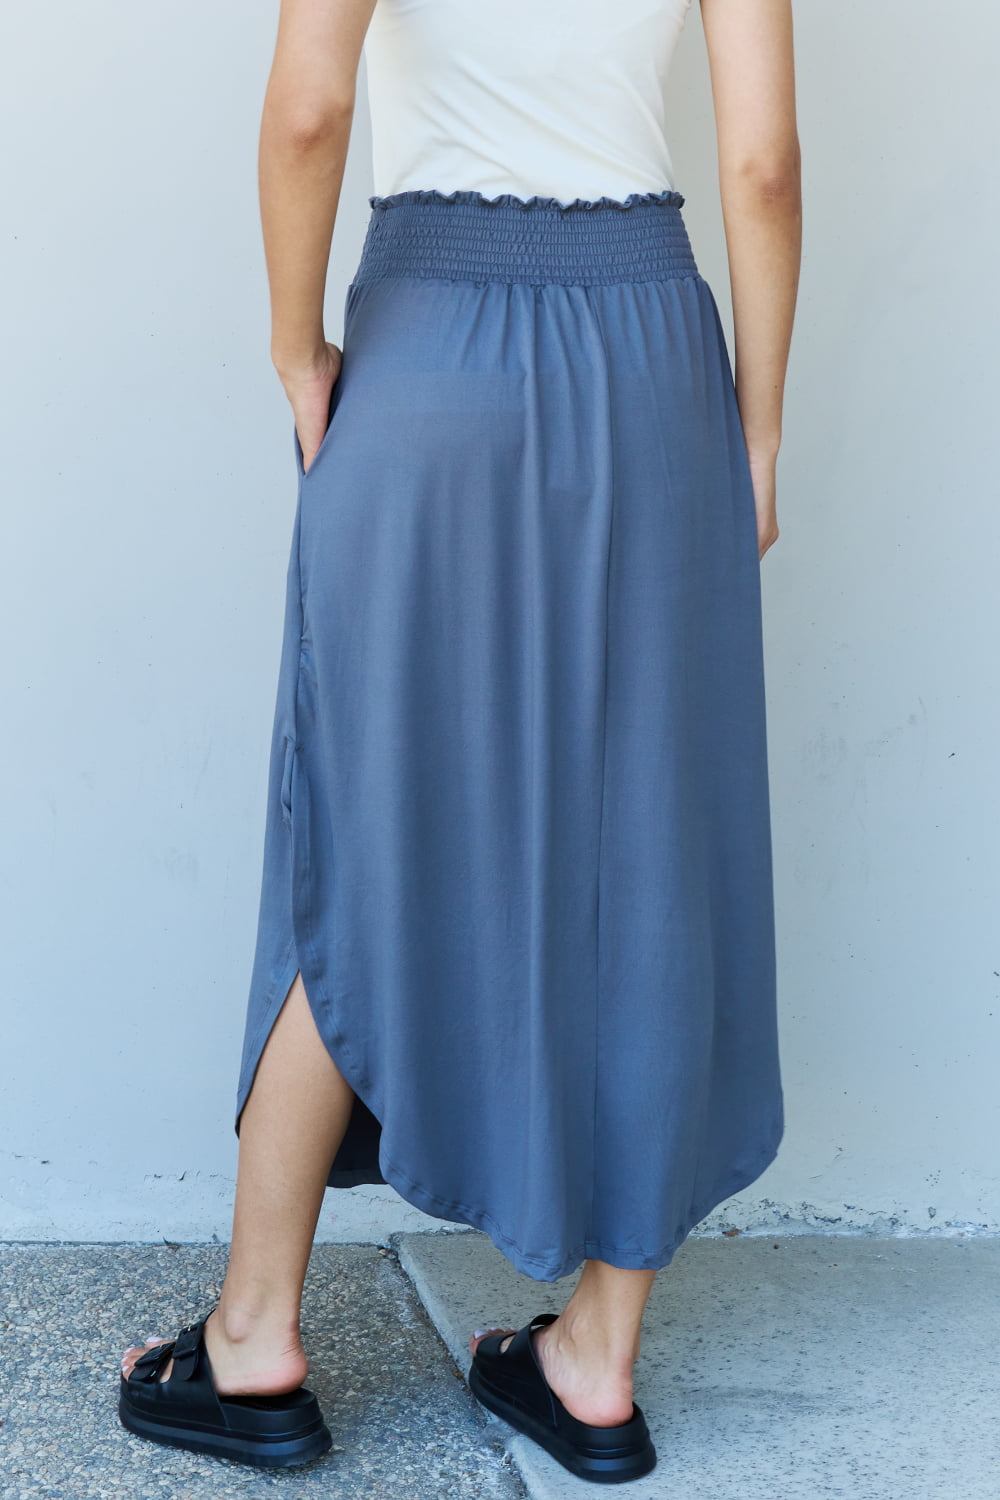 Doublju Comfort Princess Full Size High Waist Scoop Hem Maxi Skirt in Dusty Blue